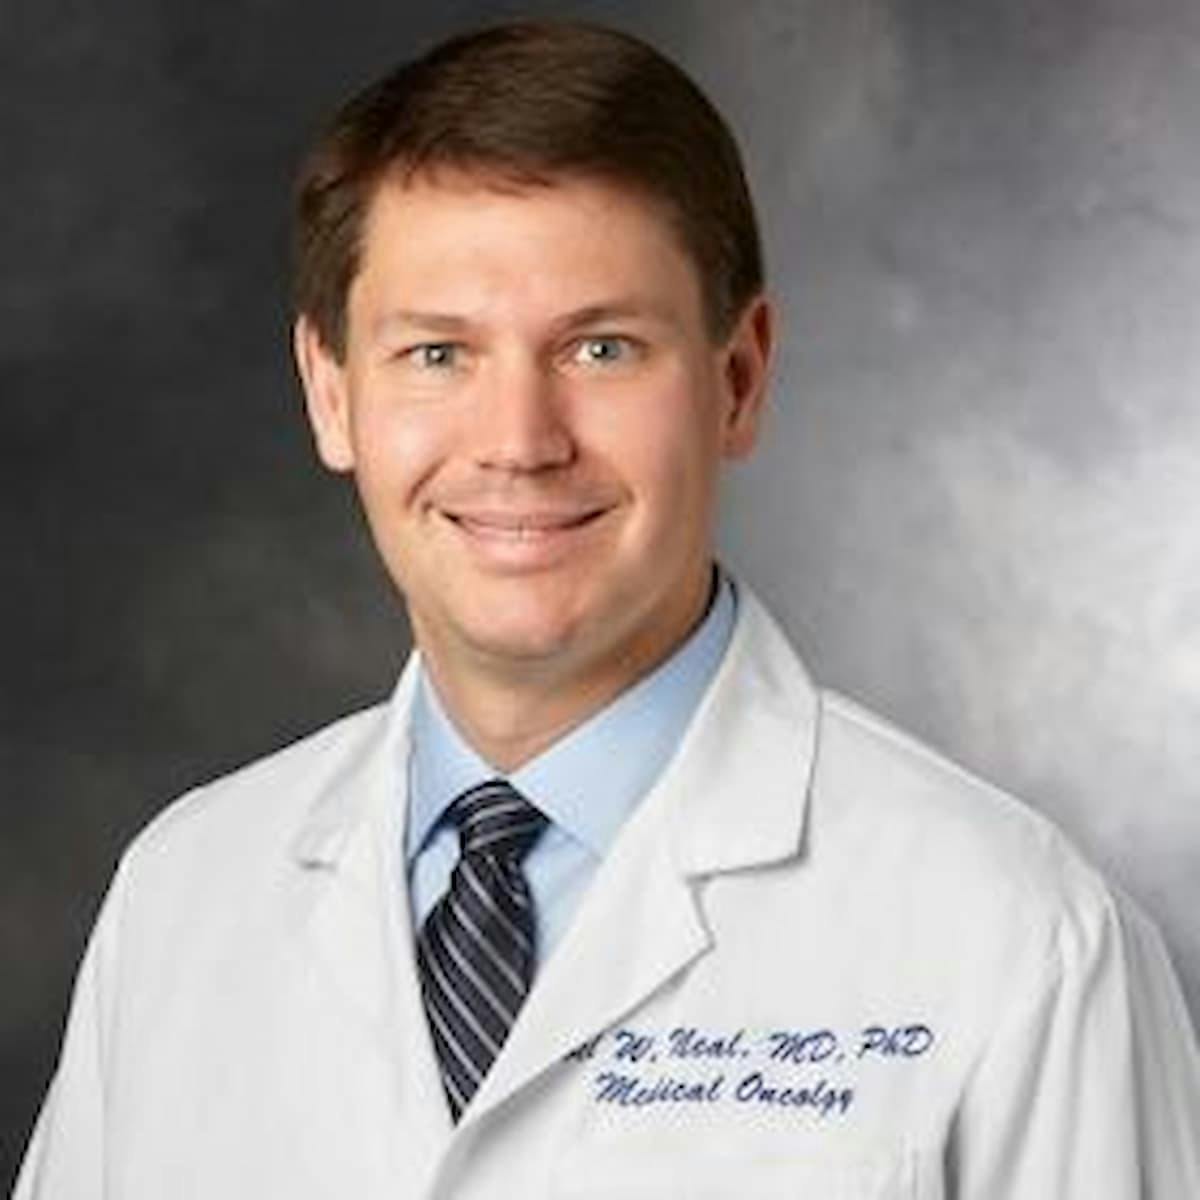 Joel W. Neal, MD, PhD, Associate Professor of Medicine (Oncology) Stanford Medicine